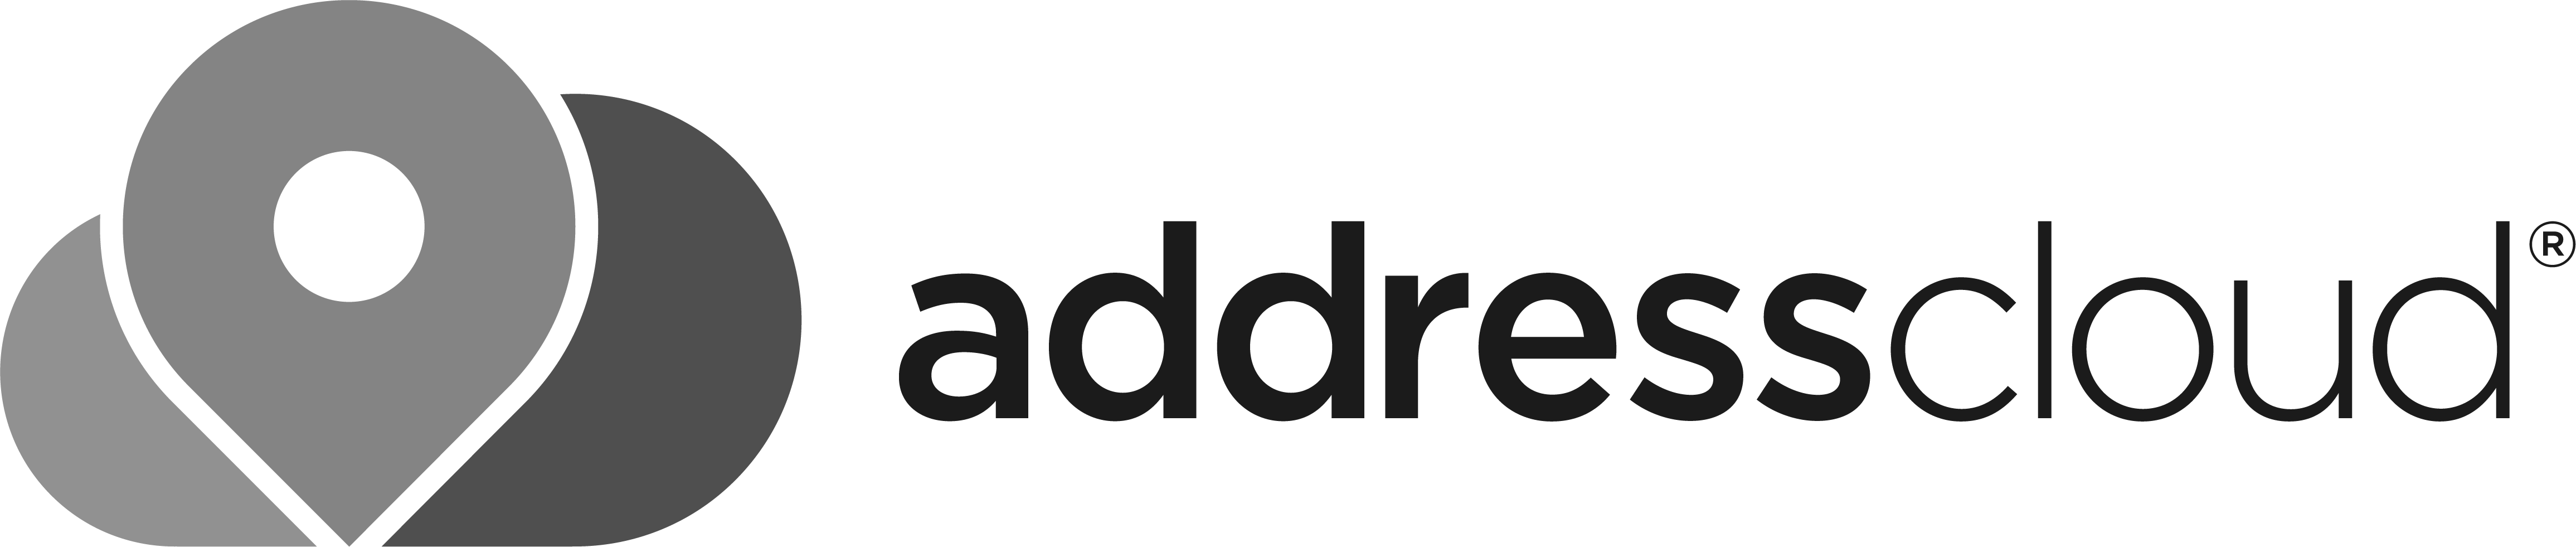 addresscloud Logo